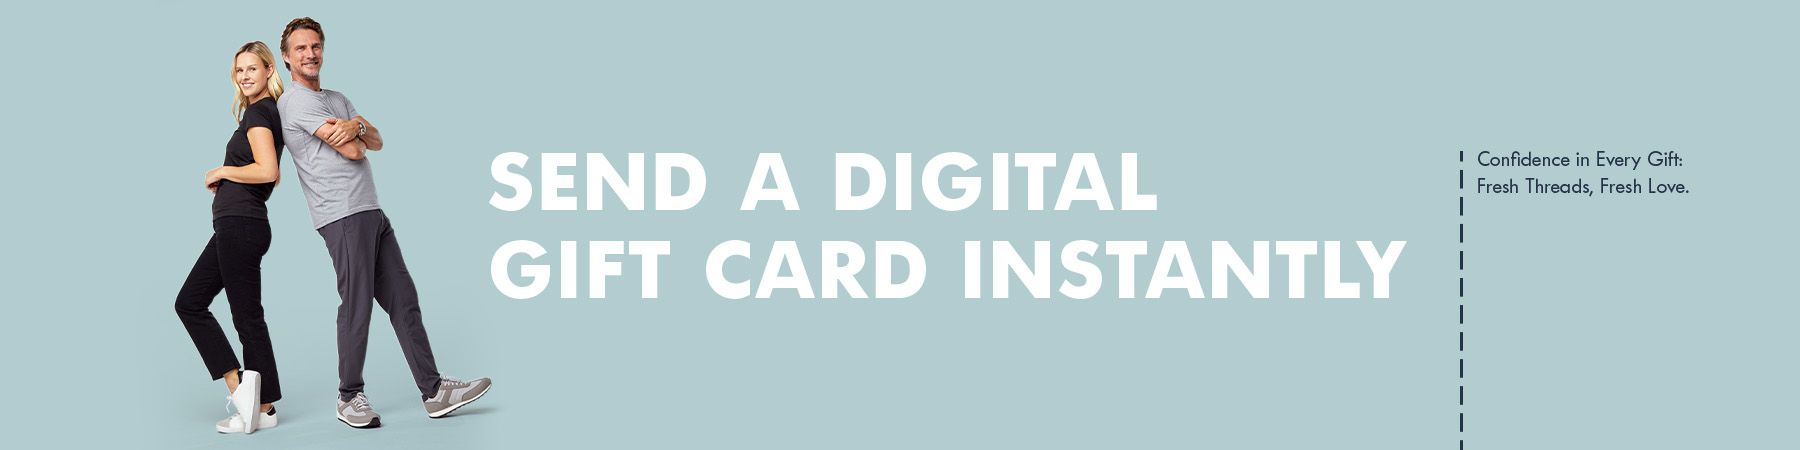 Digital Gift Cards | Fresh Clean Threads